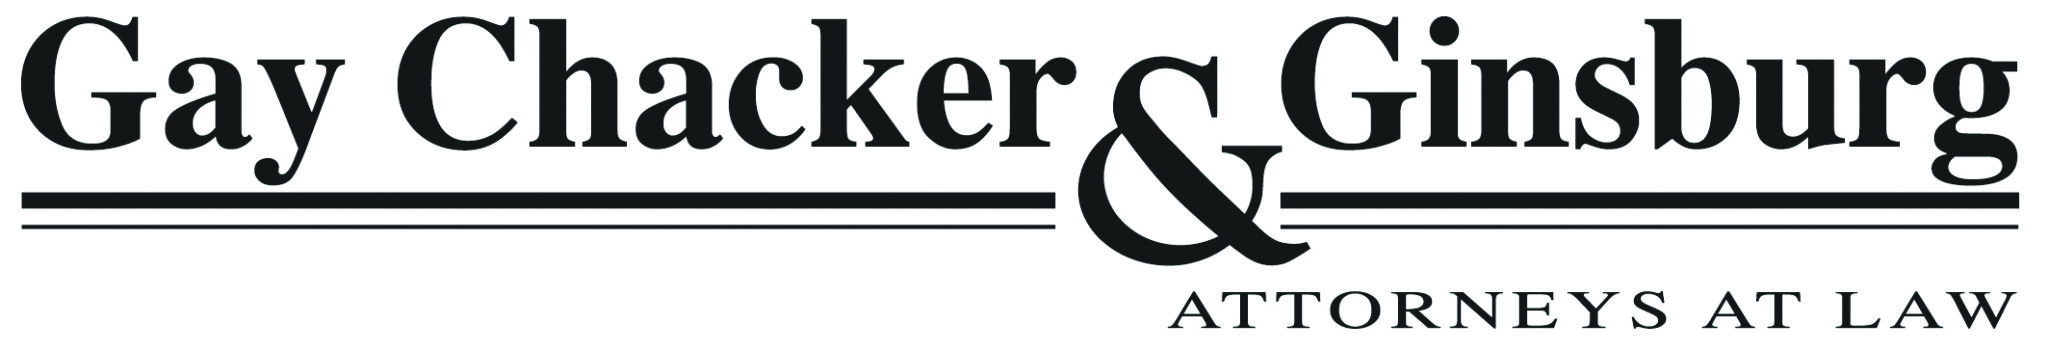 Gay & Chacker Attorney Logo